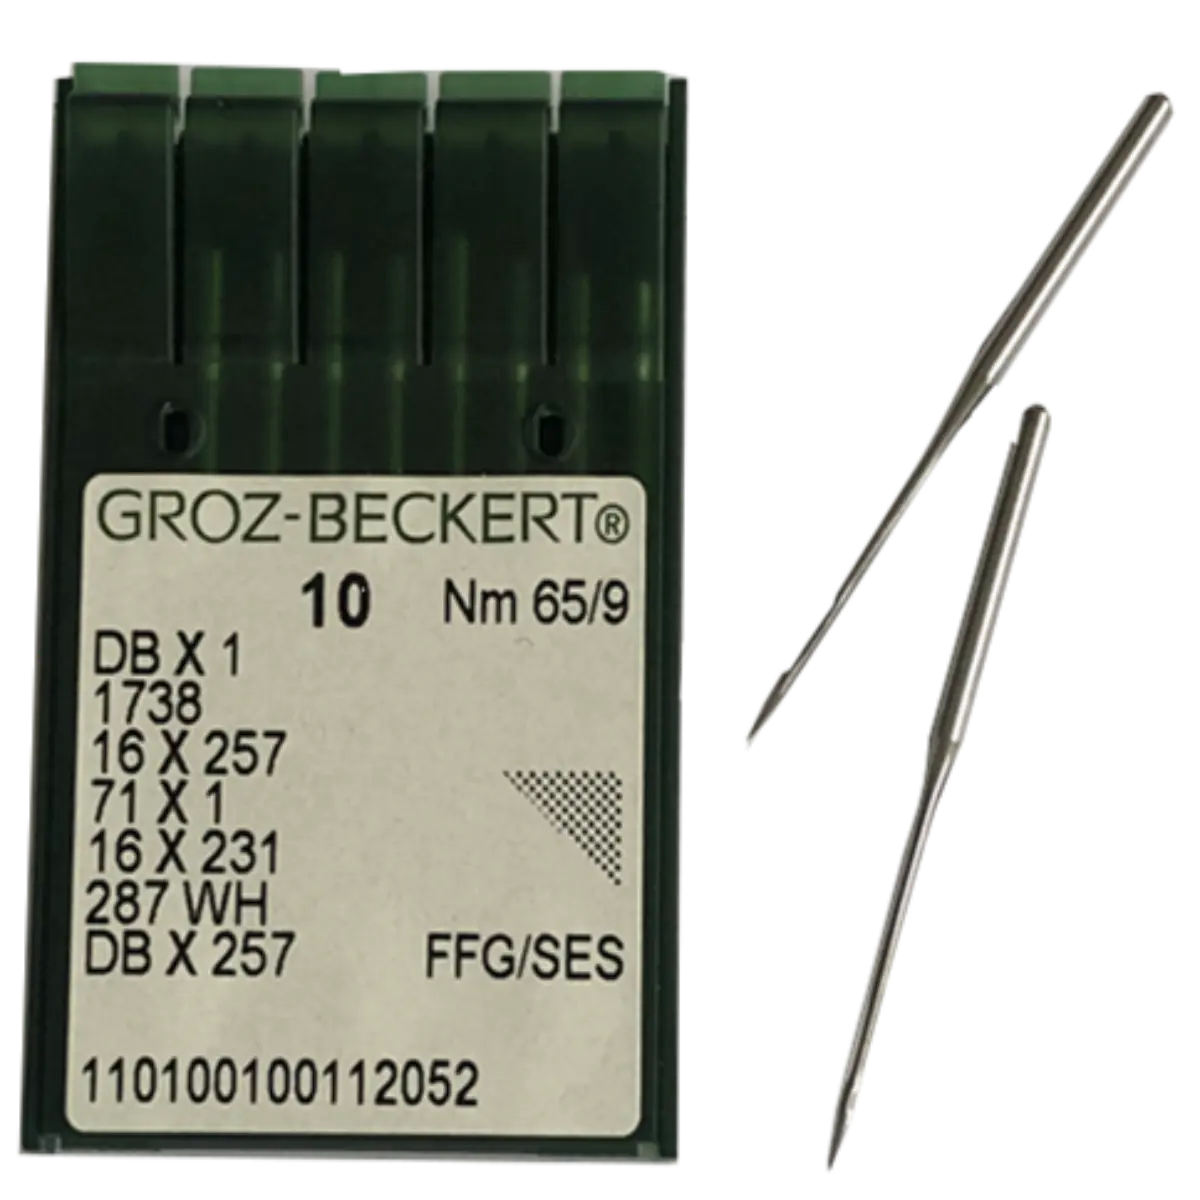 Quality Groz-Beckert industrial sewing needles 1738A, 16x231, DBx1, 16x257 Size 65